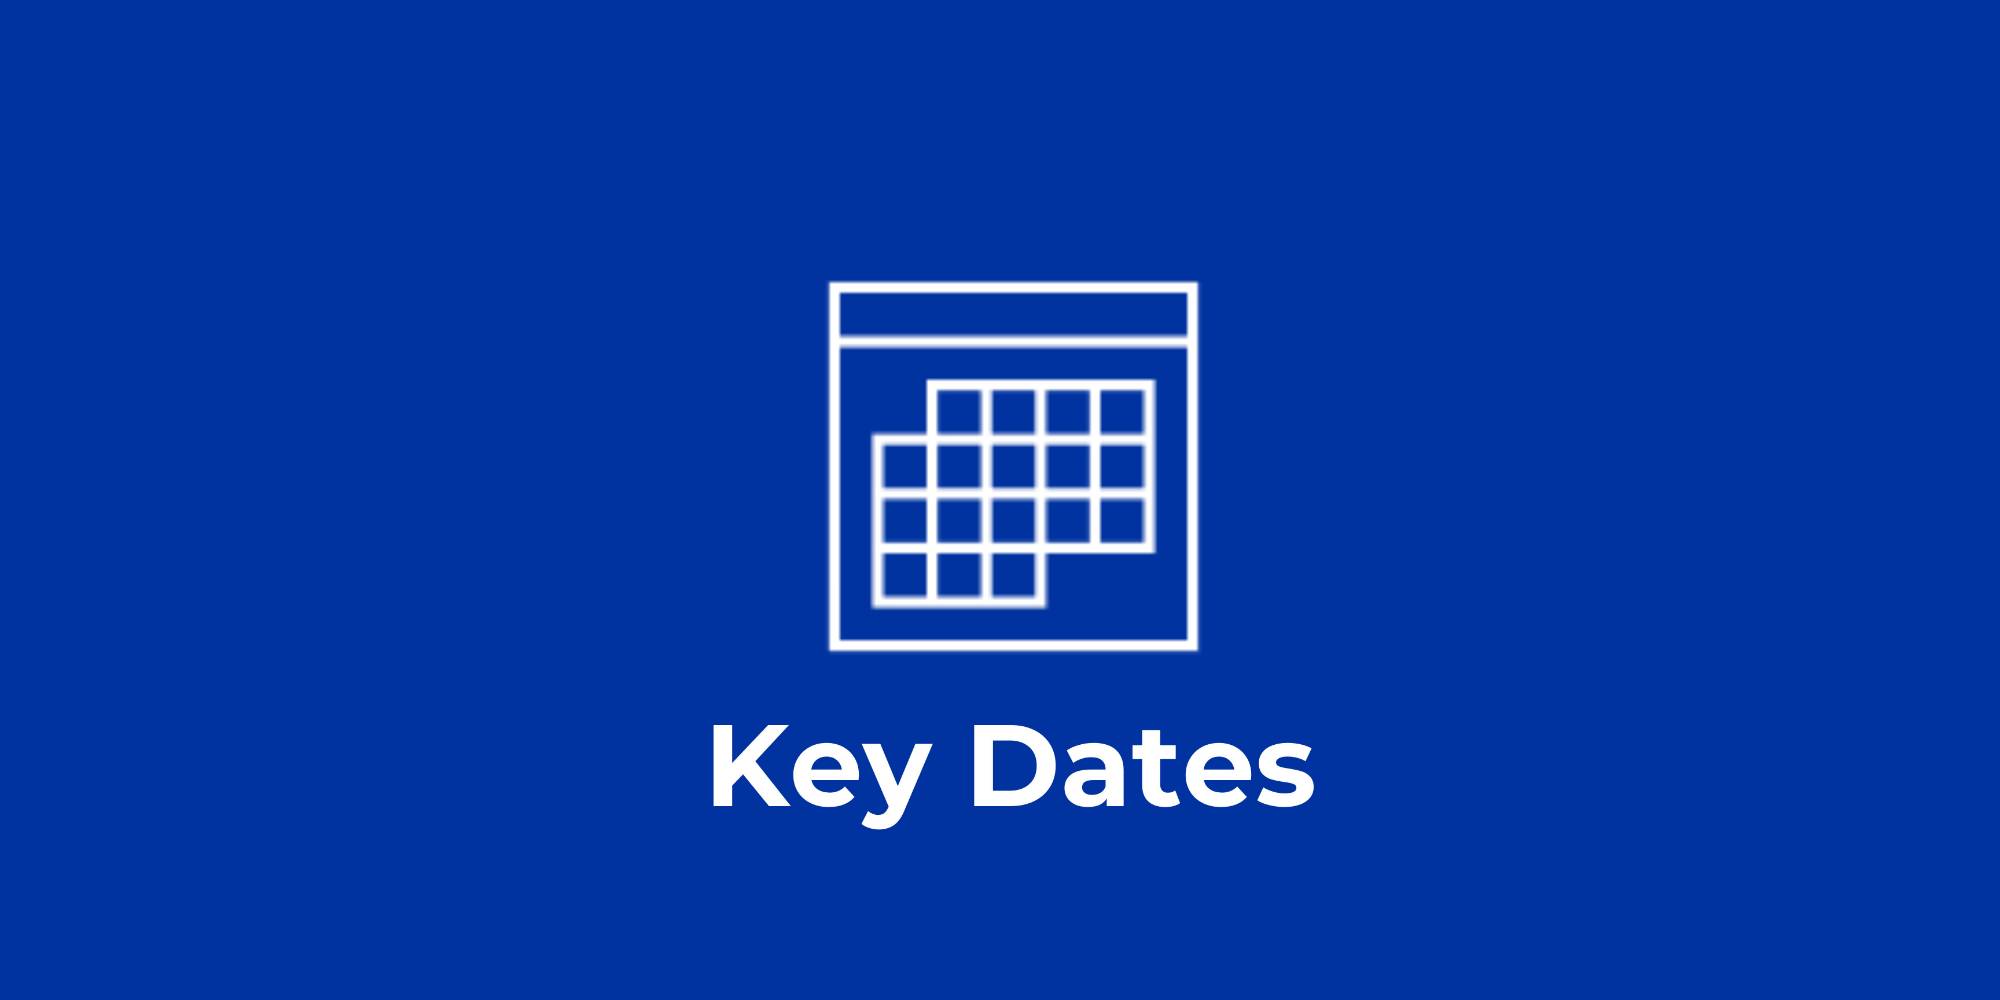 Workday Key Dates Image